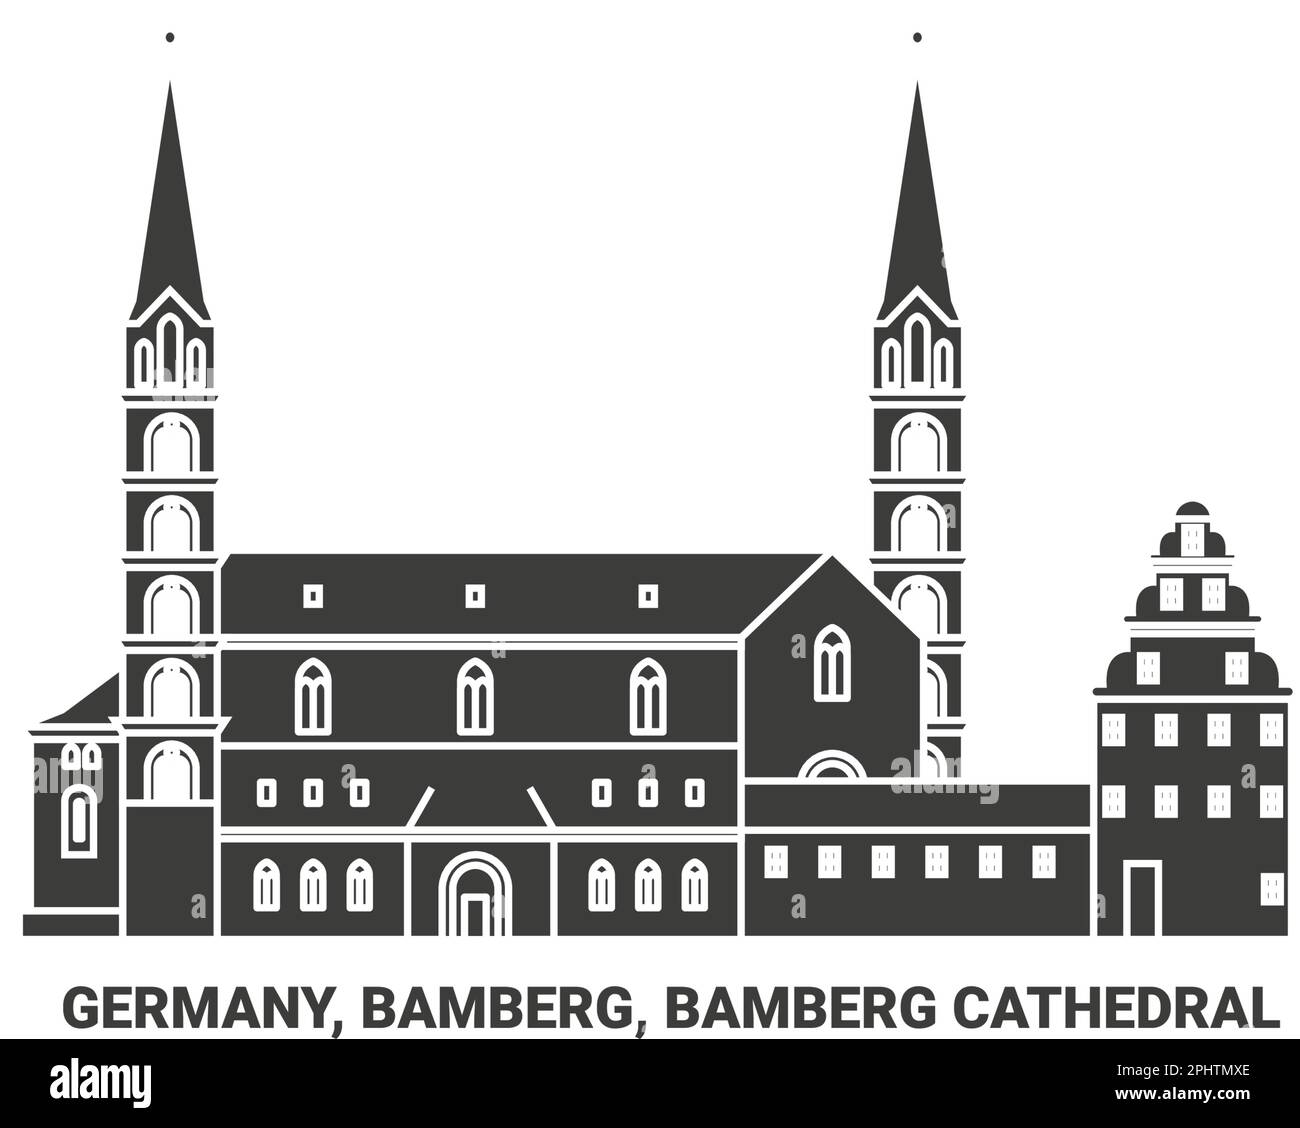 Germany, Bamberg, Bamberg Cathedral travel landmark vector illustration Stock Vector